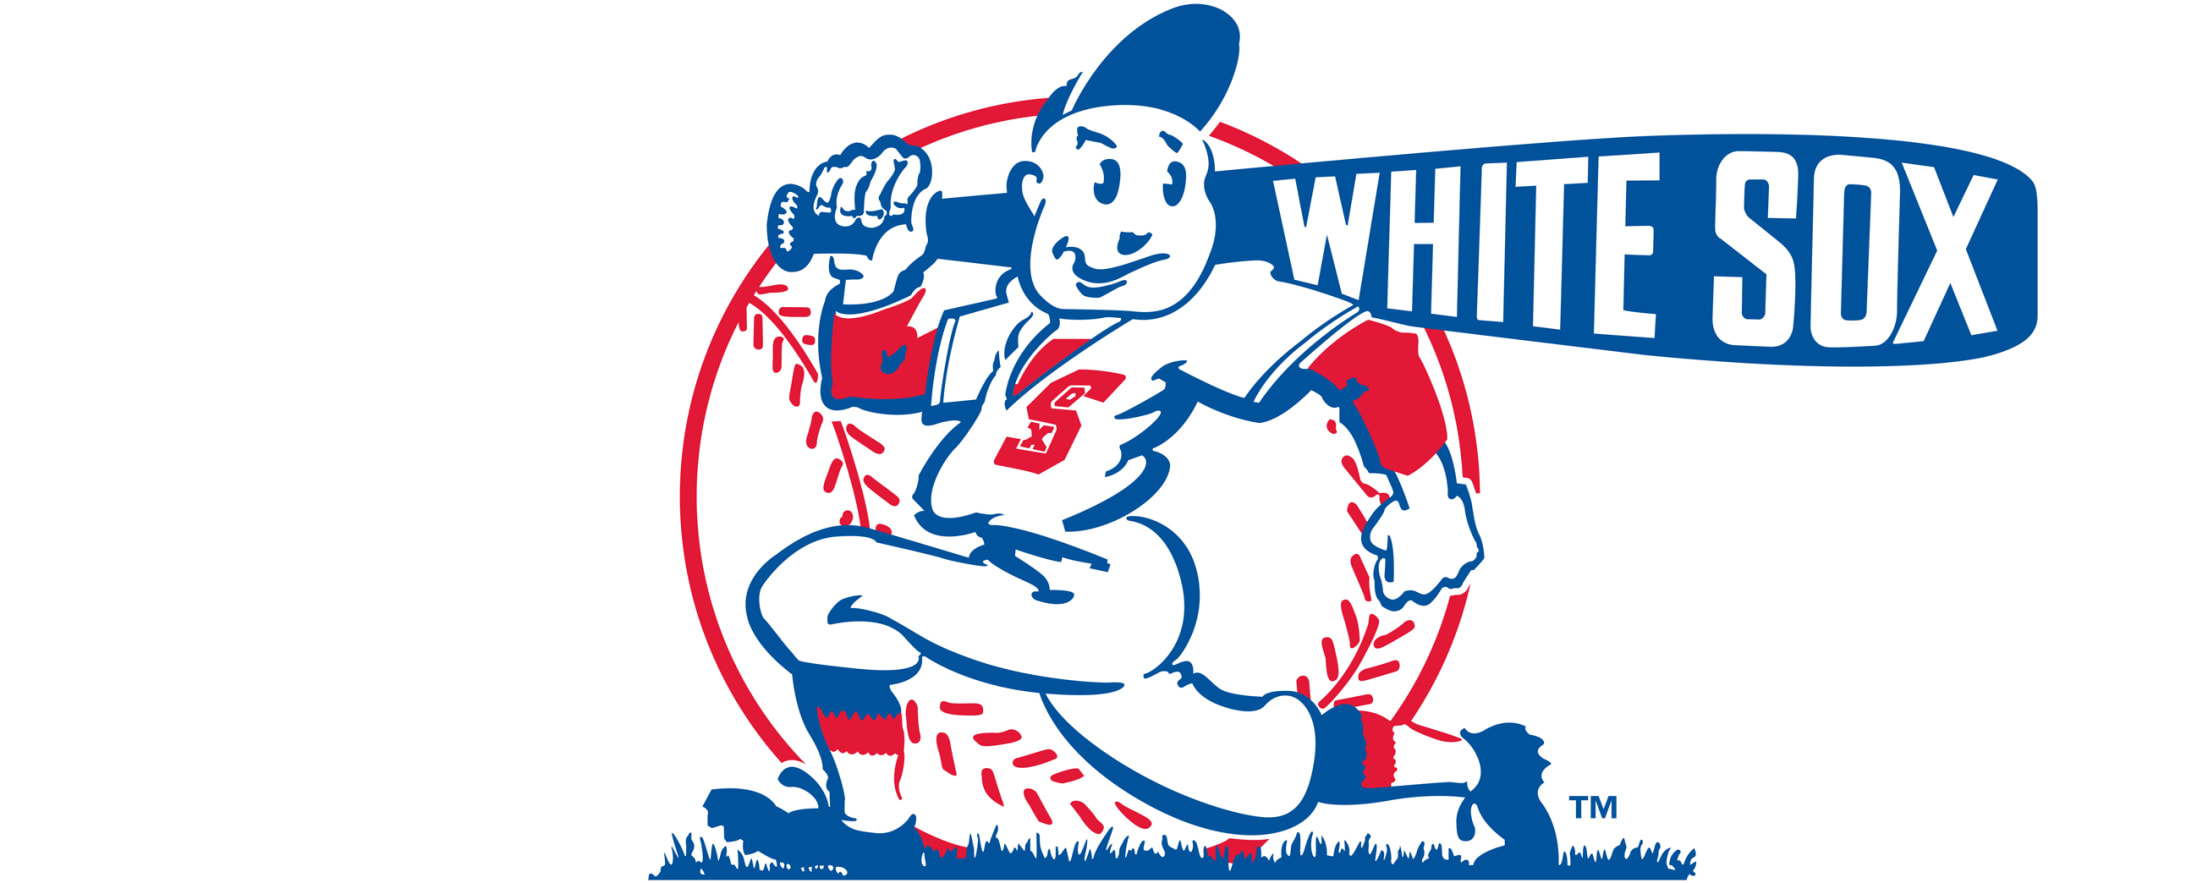 chicago white sox retro logo